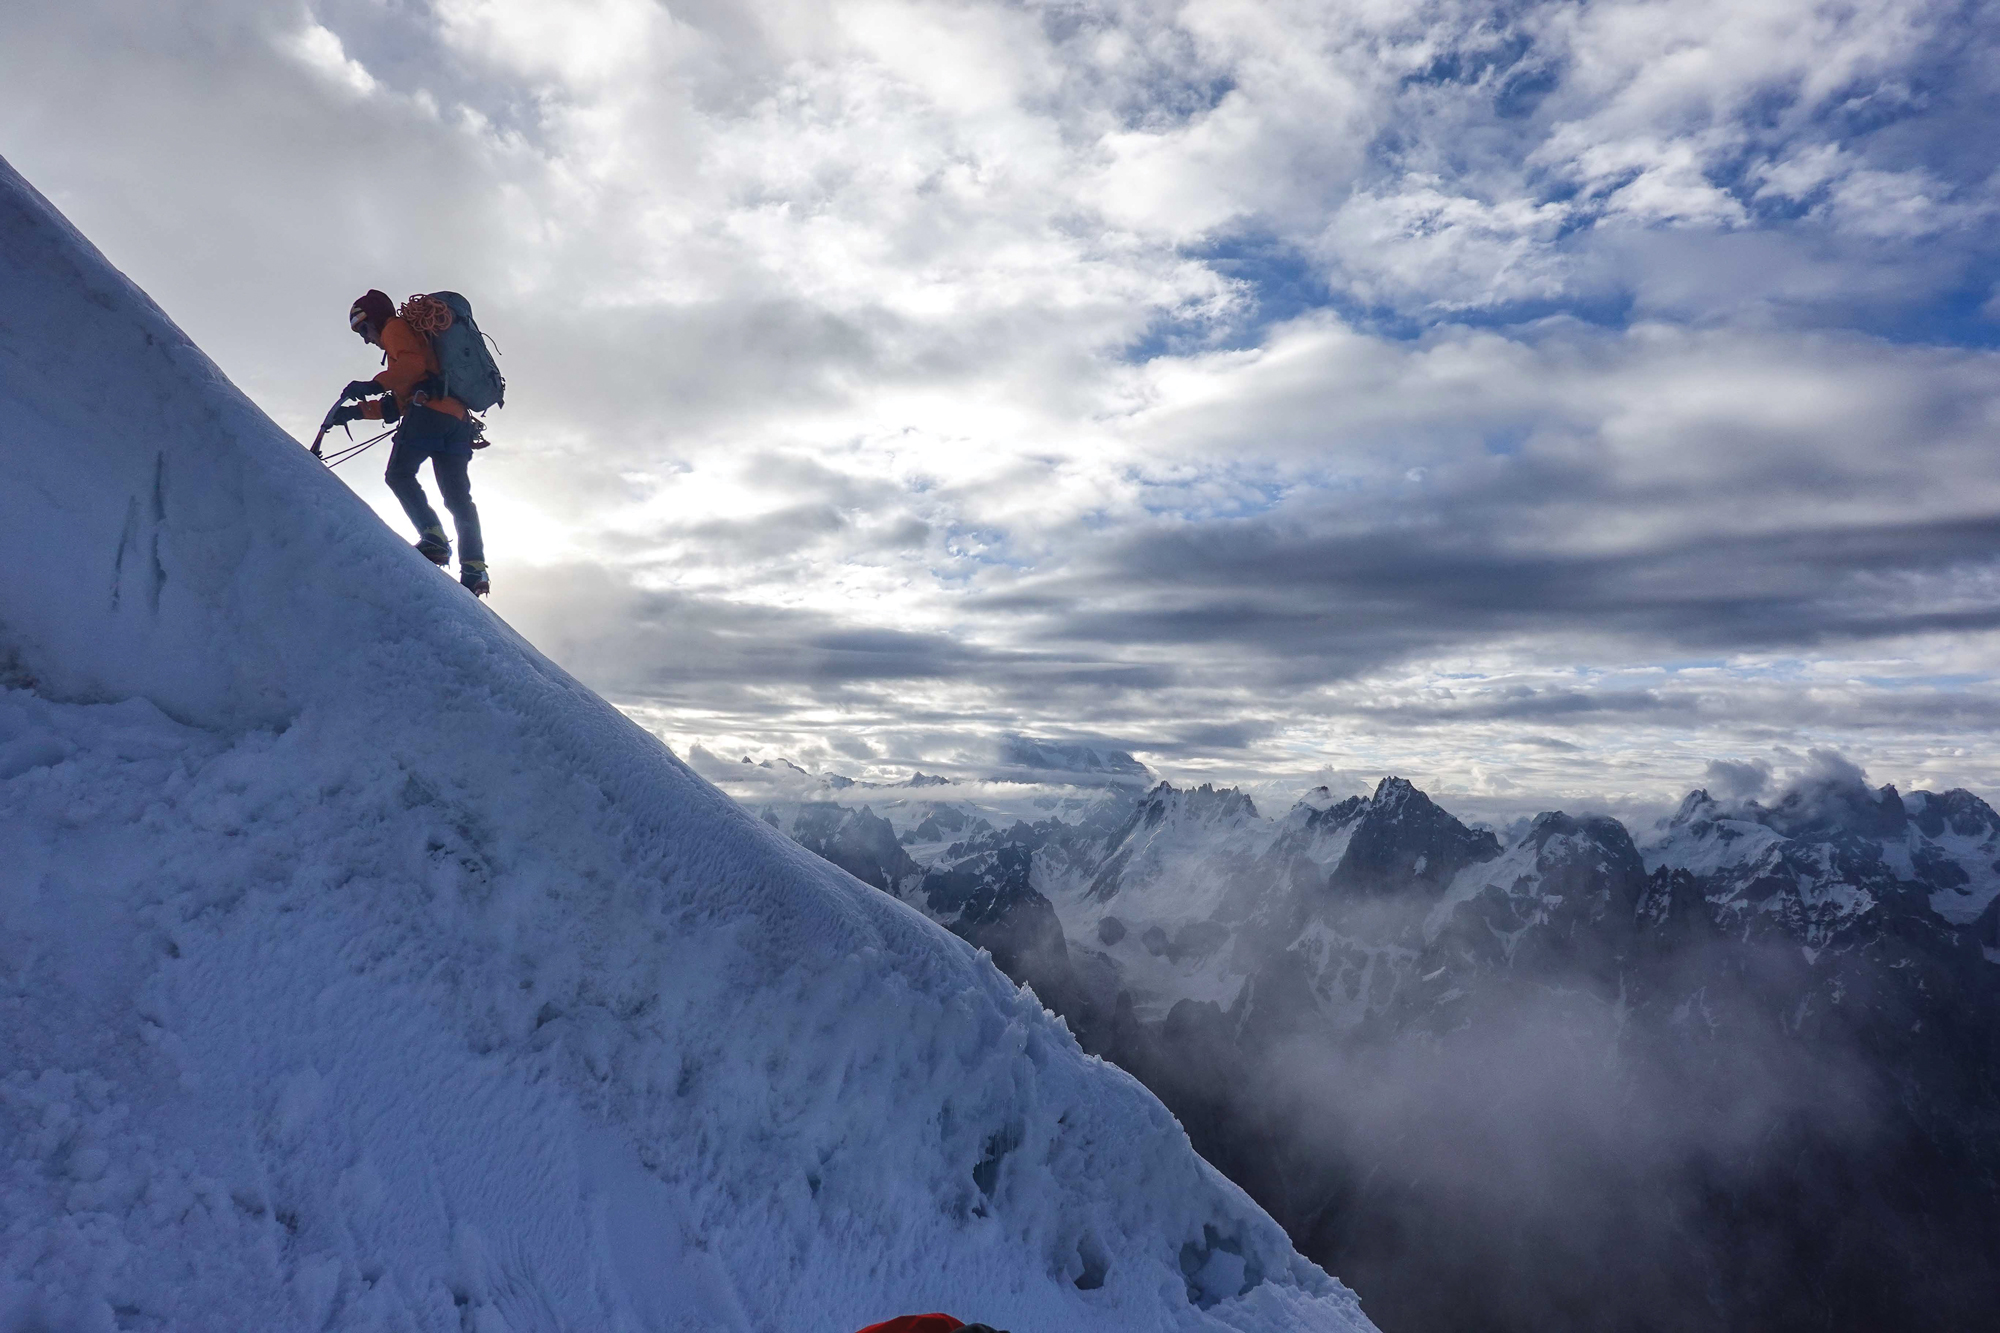 A man hikes a steep, snowy slope